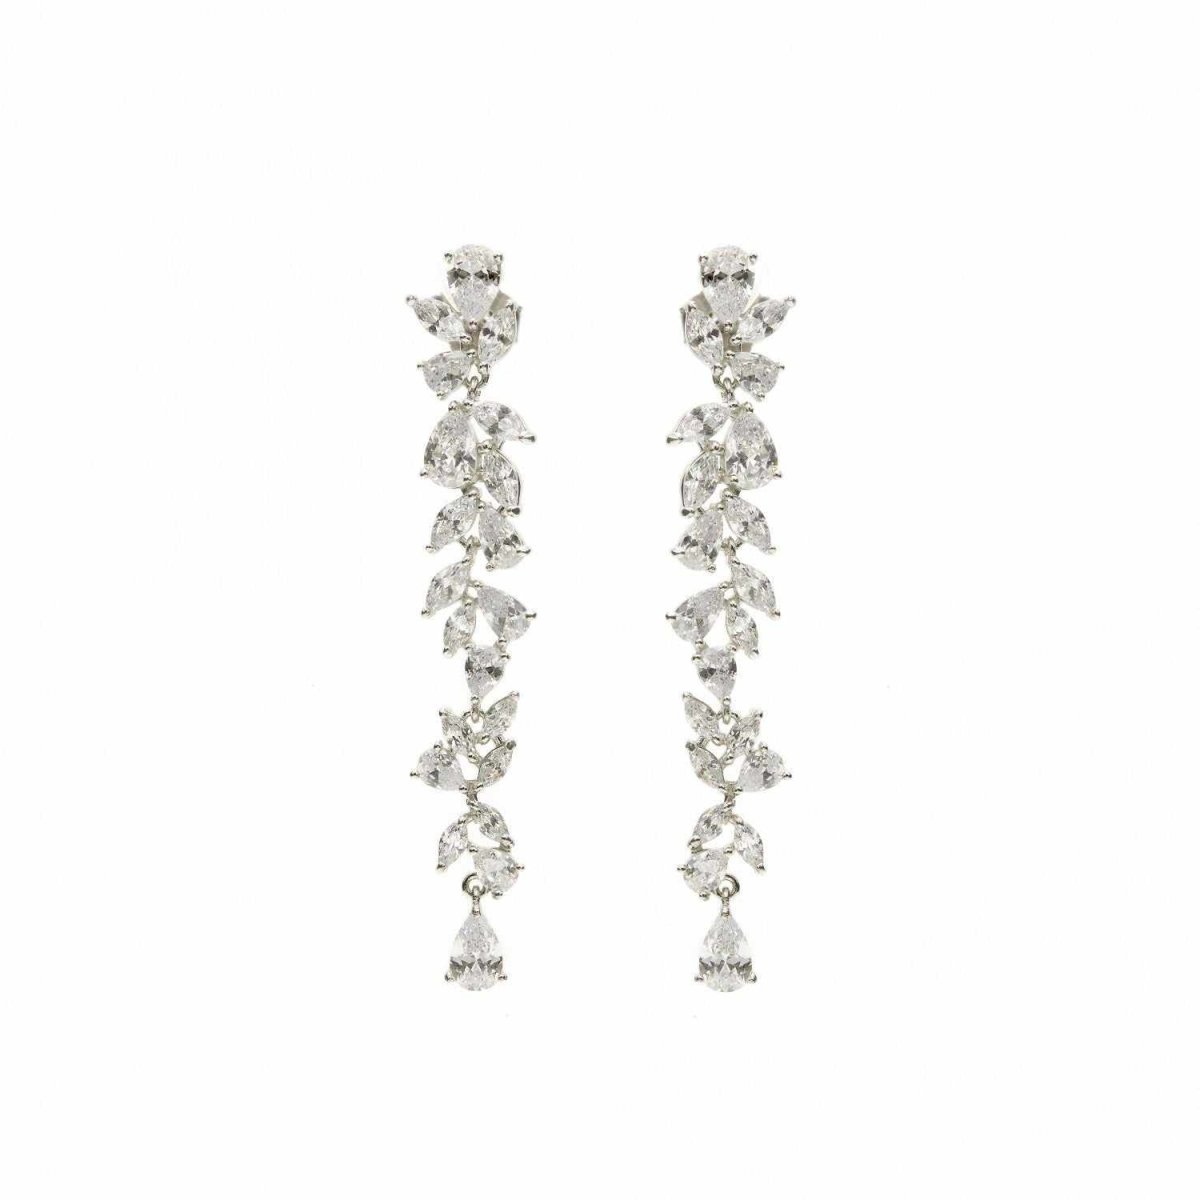 Earrings - Long earrings bride floral design with adamantine quartzes